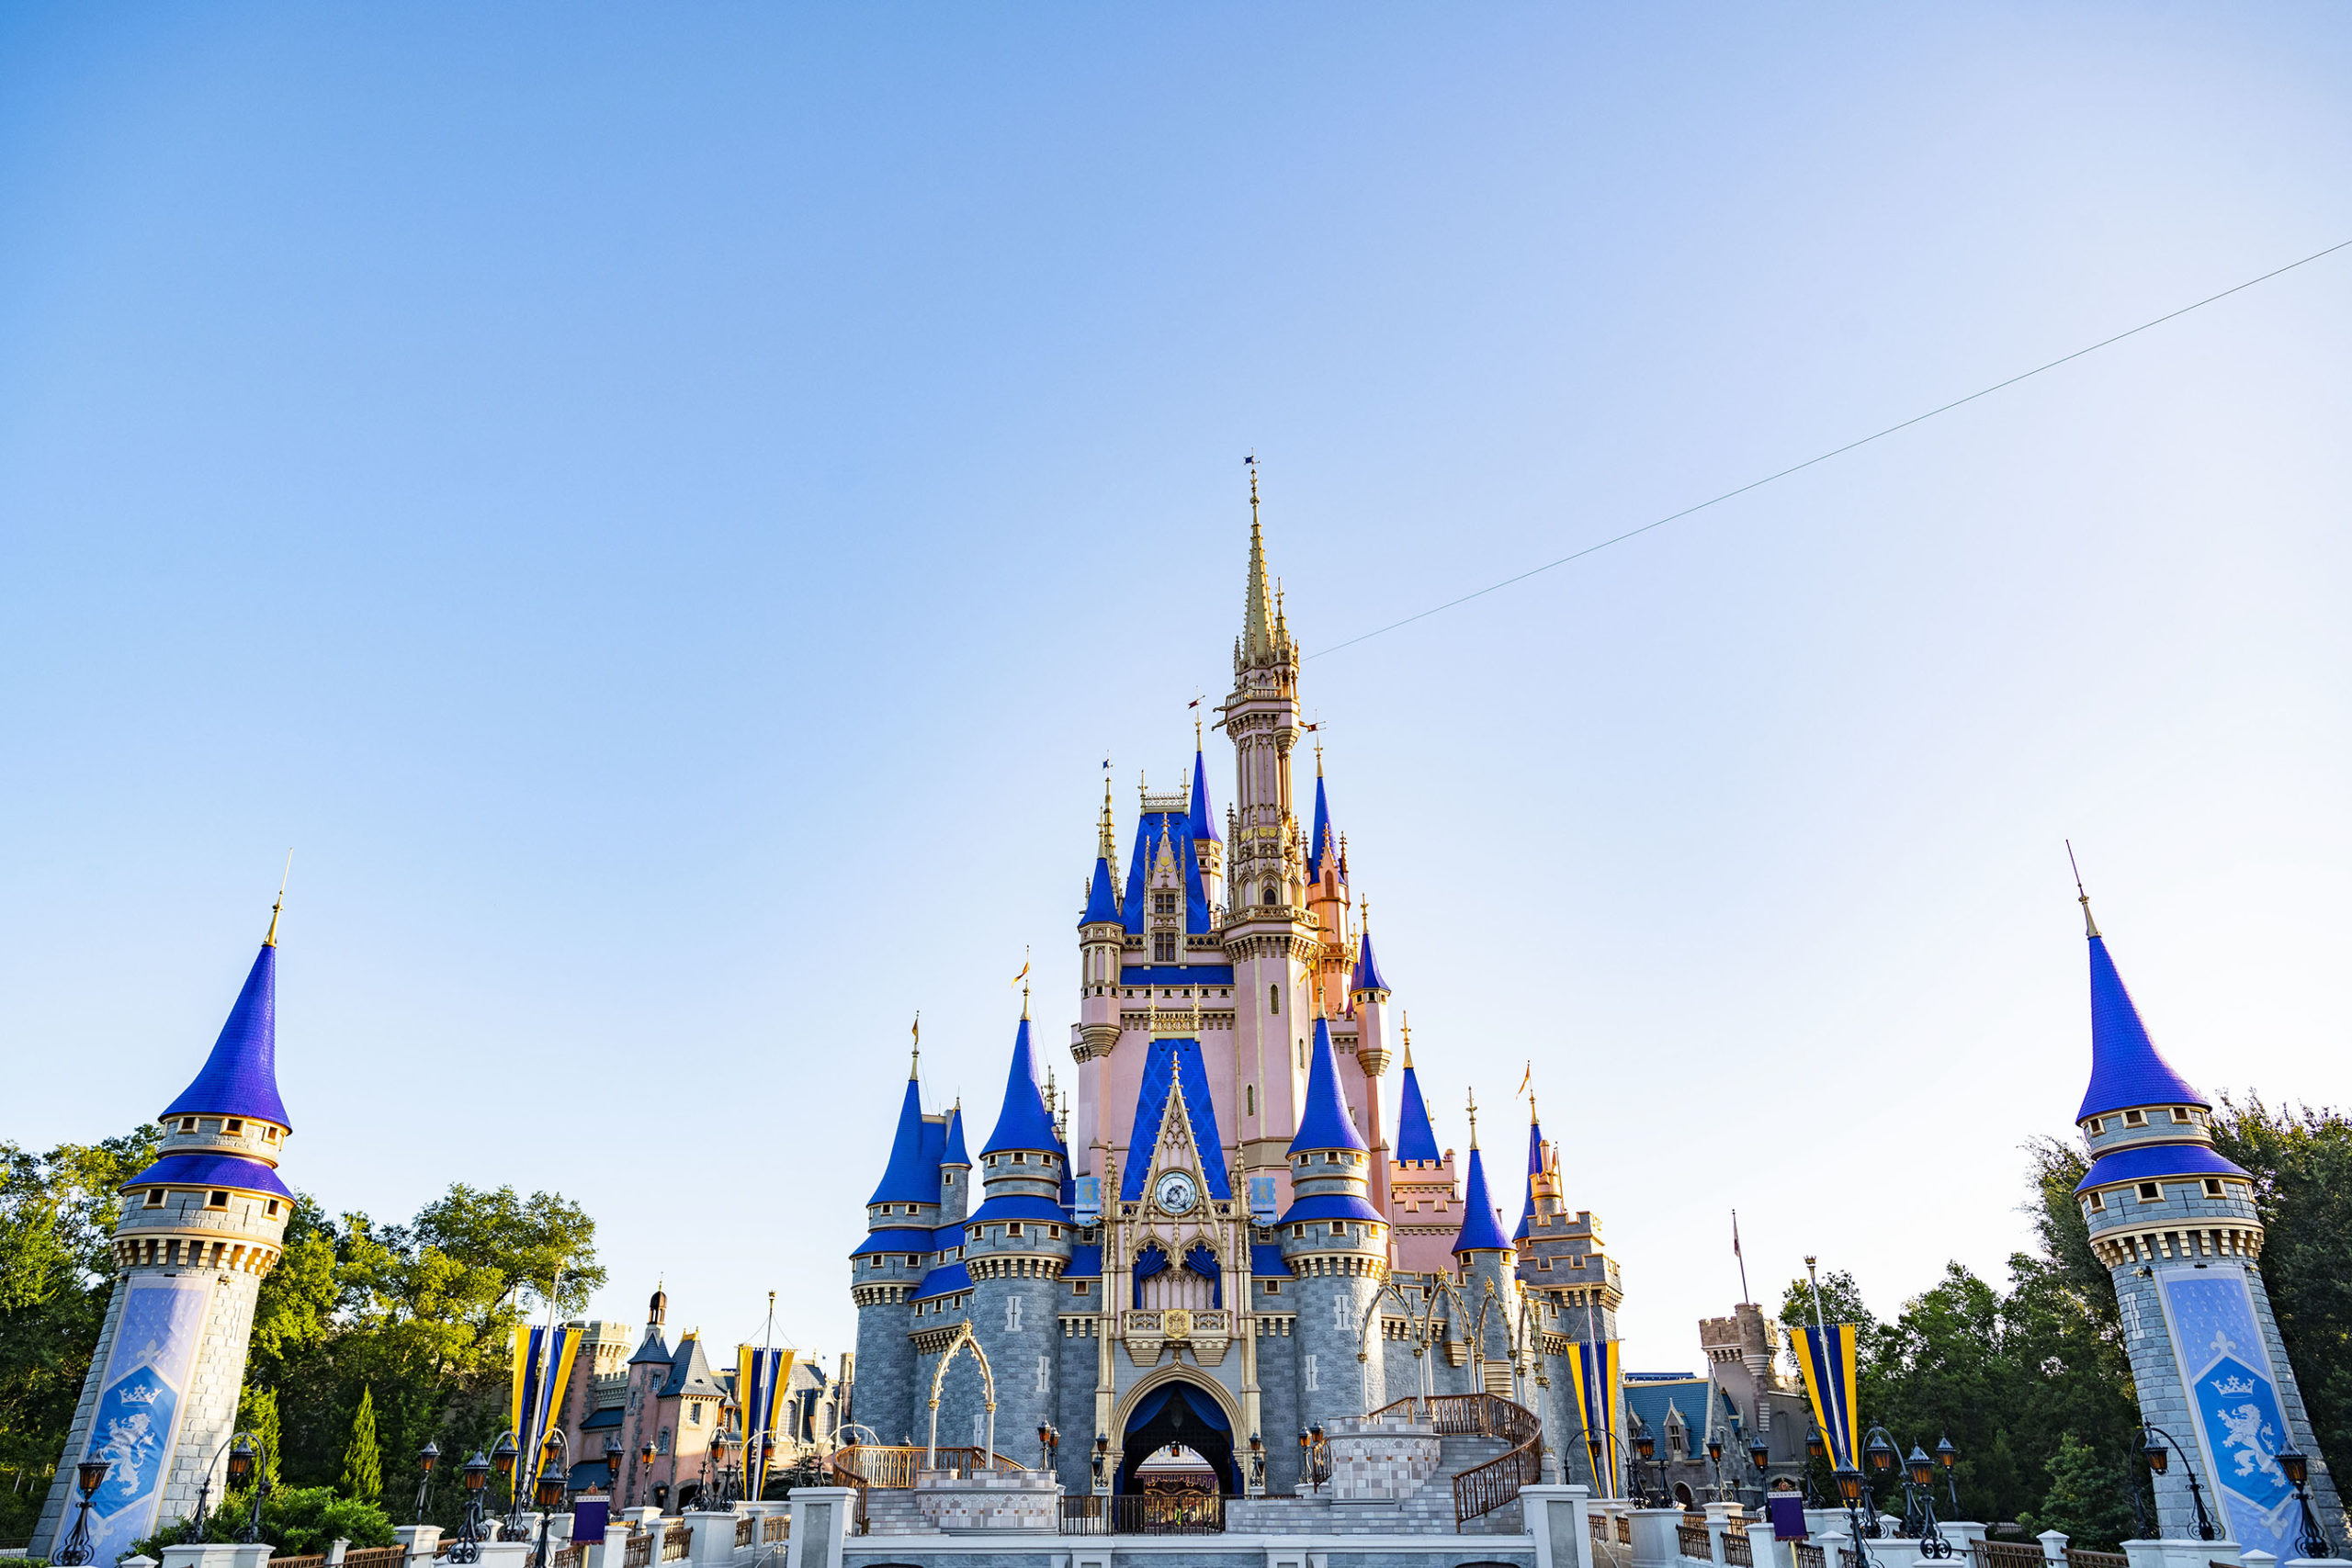 Cinderella castle, an essential Disney World landmark.